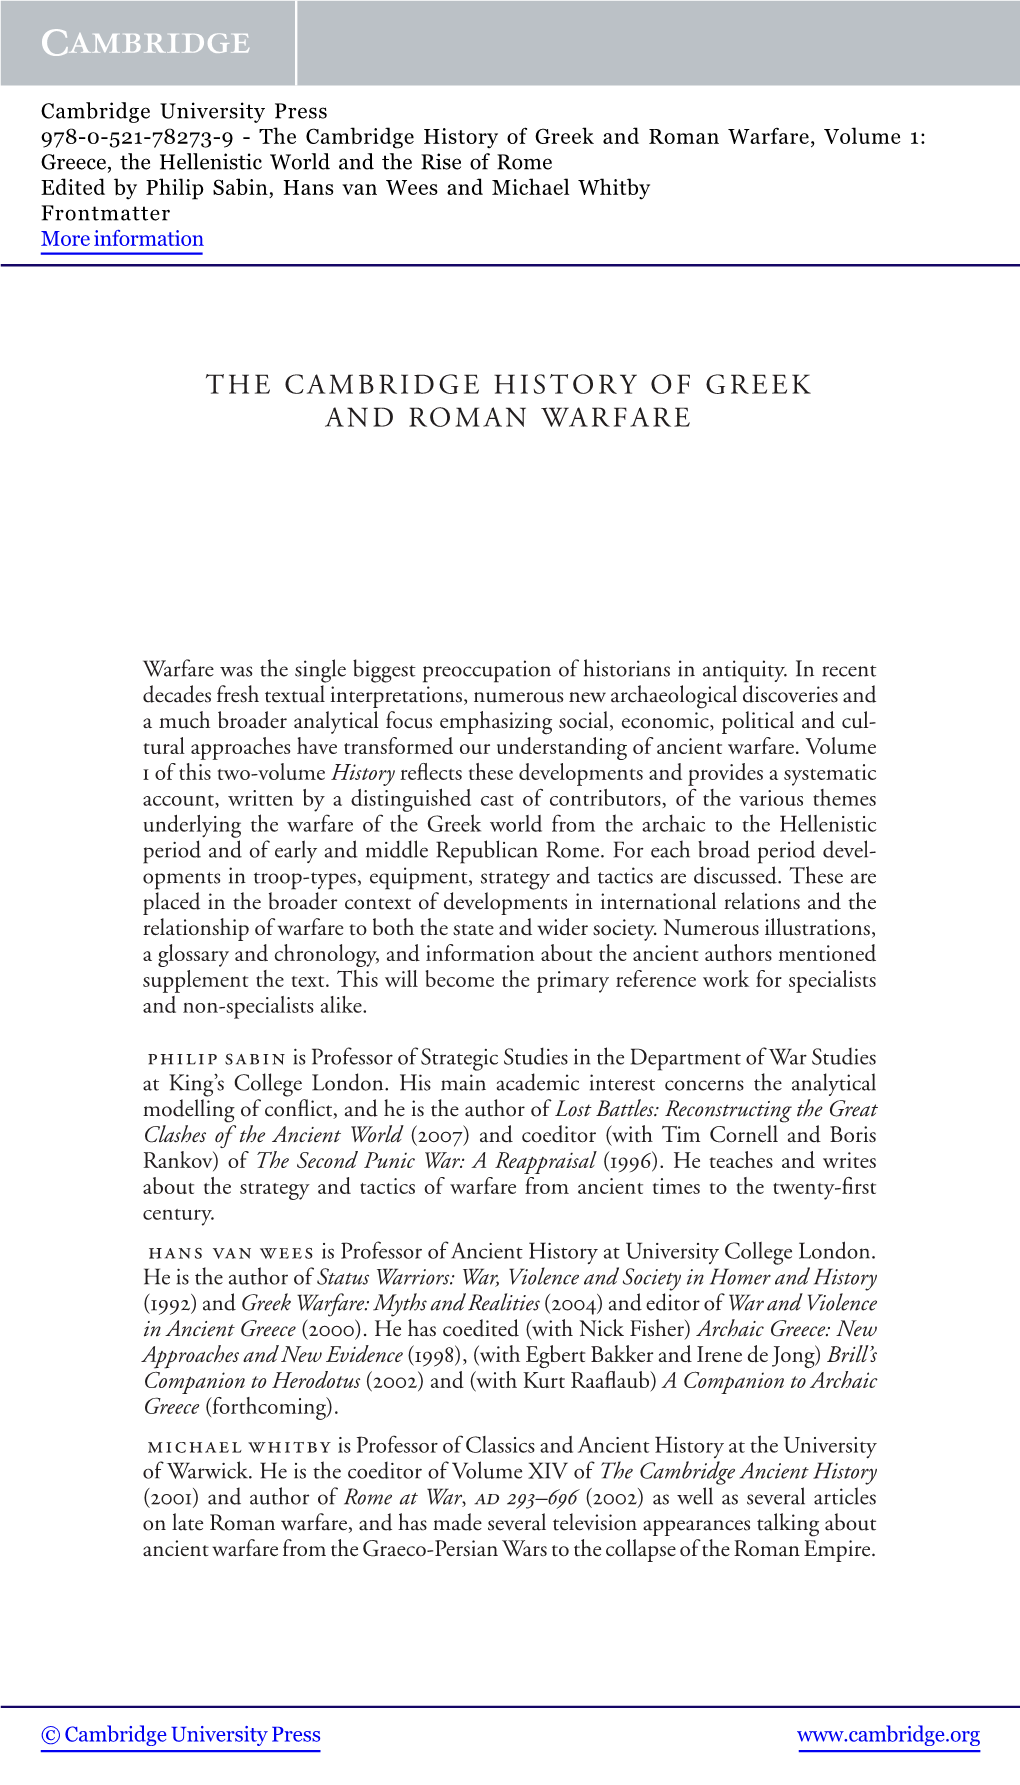 The Cambridge History of Greek and Roman Warfare